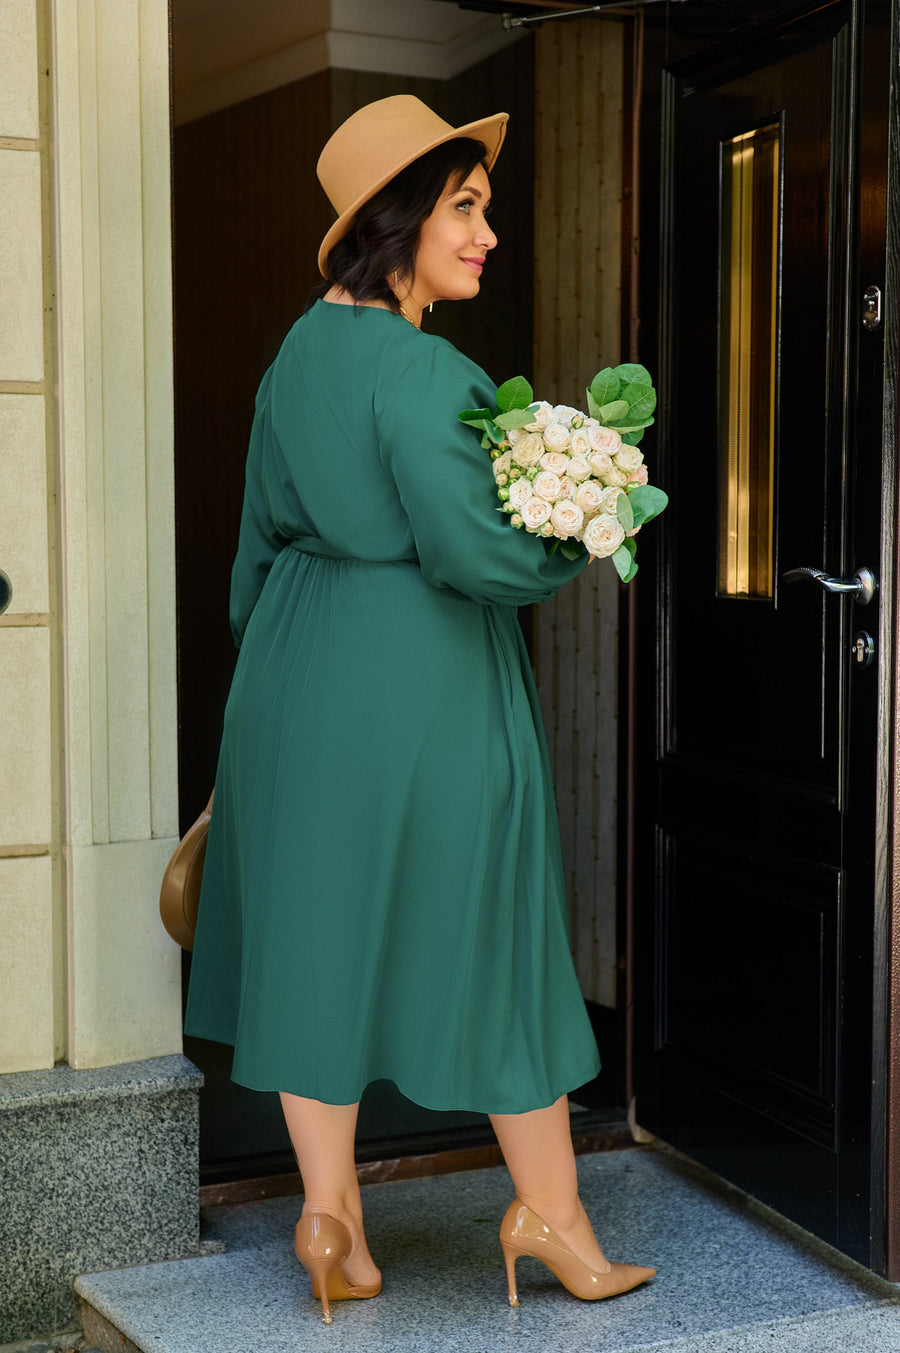 Knee-length dress with pockets